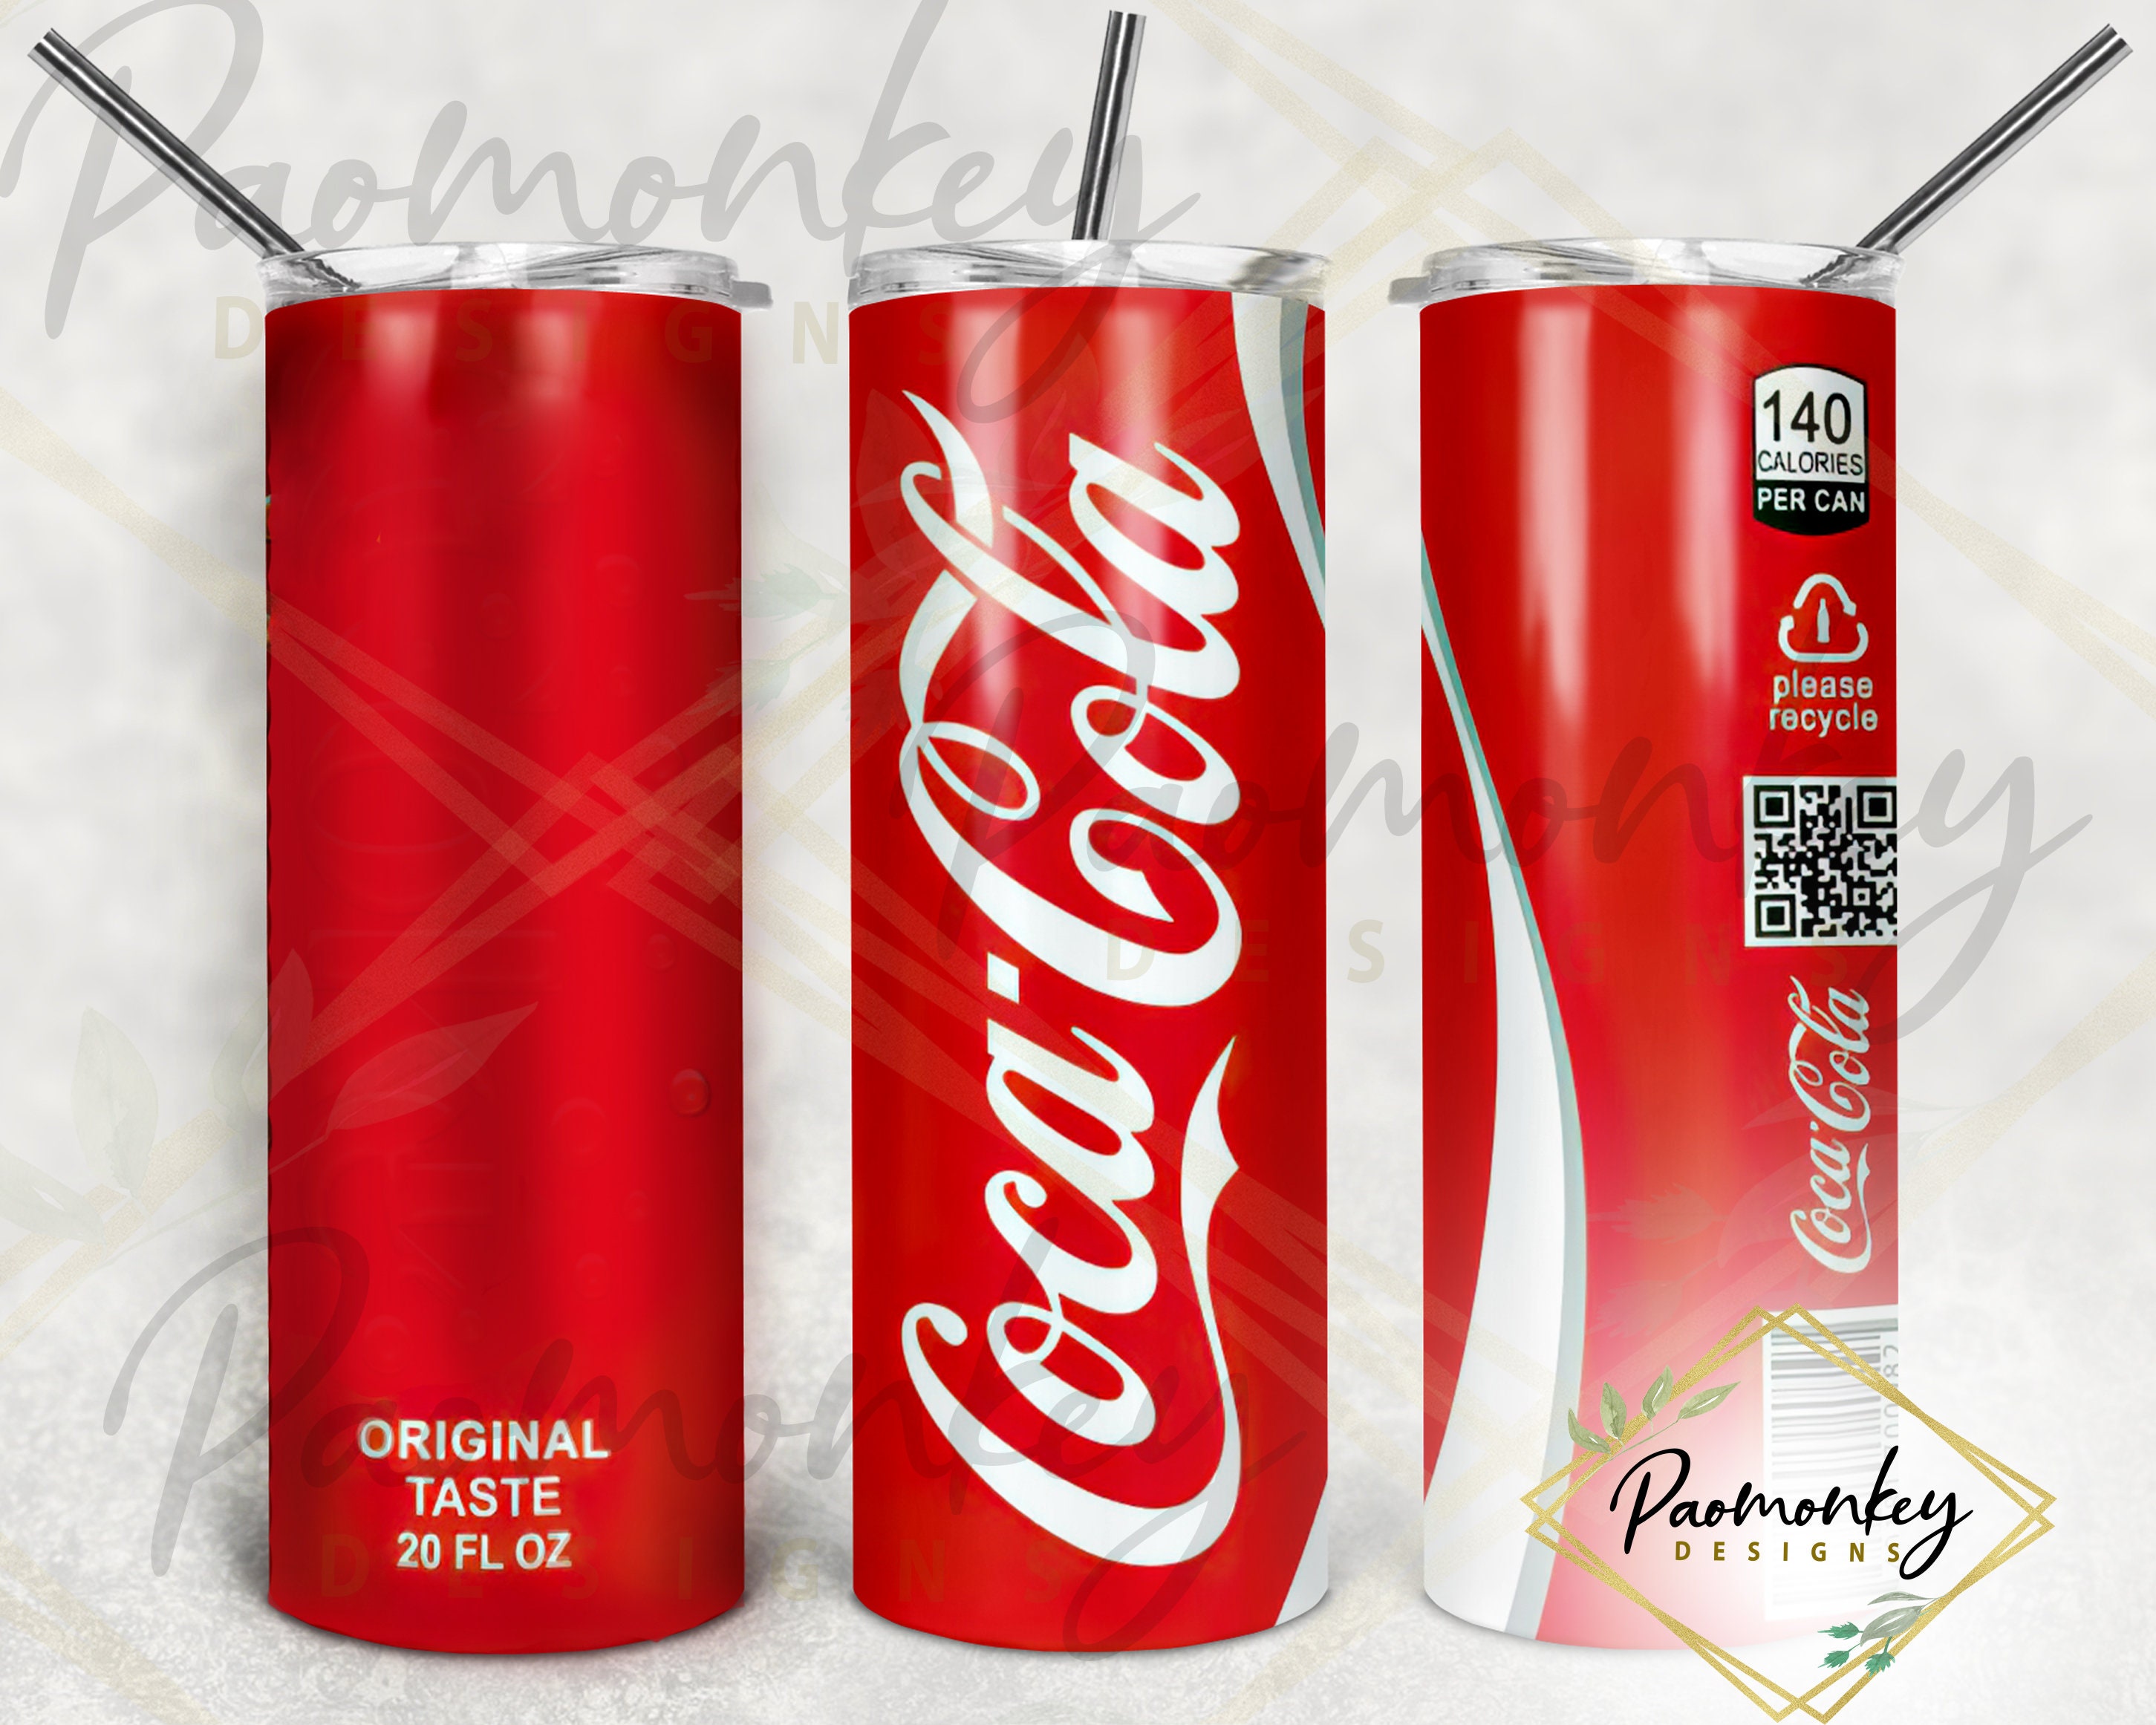 16oz 310 PP Coca-Cola Cup with Lid